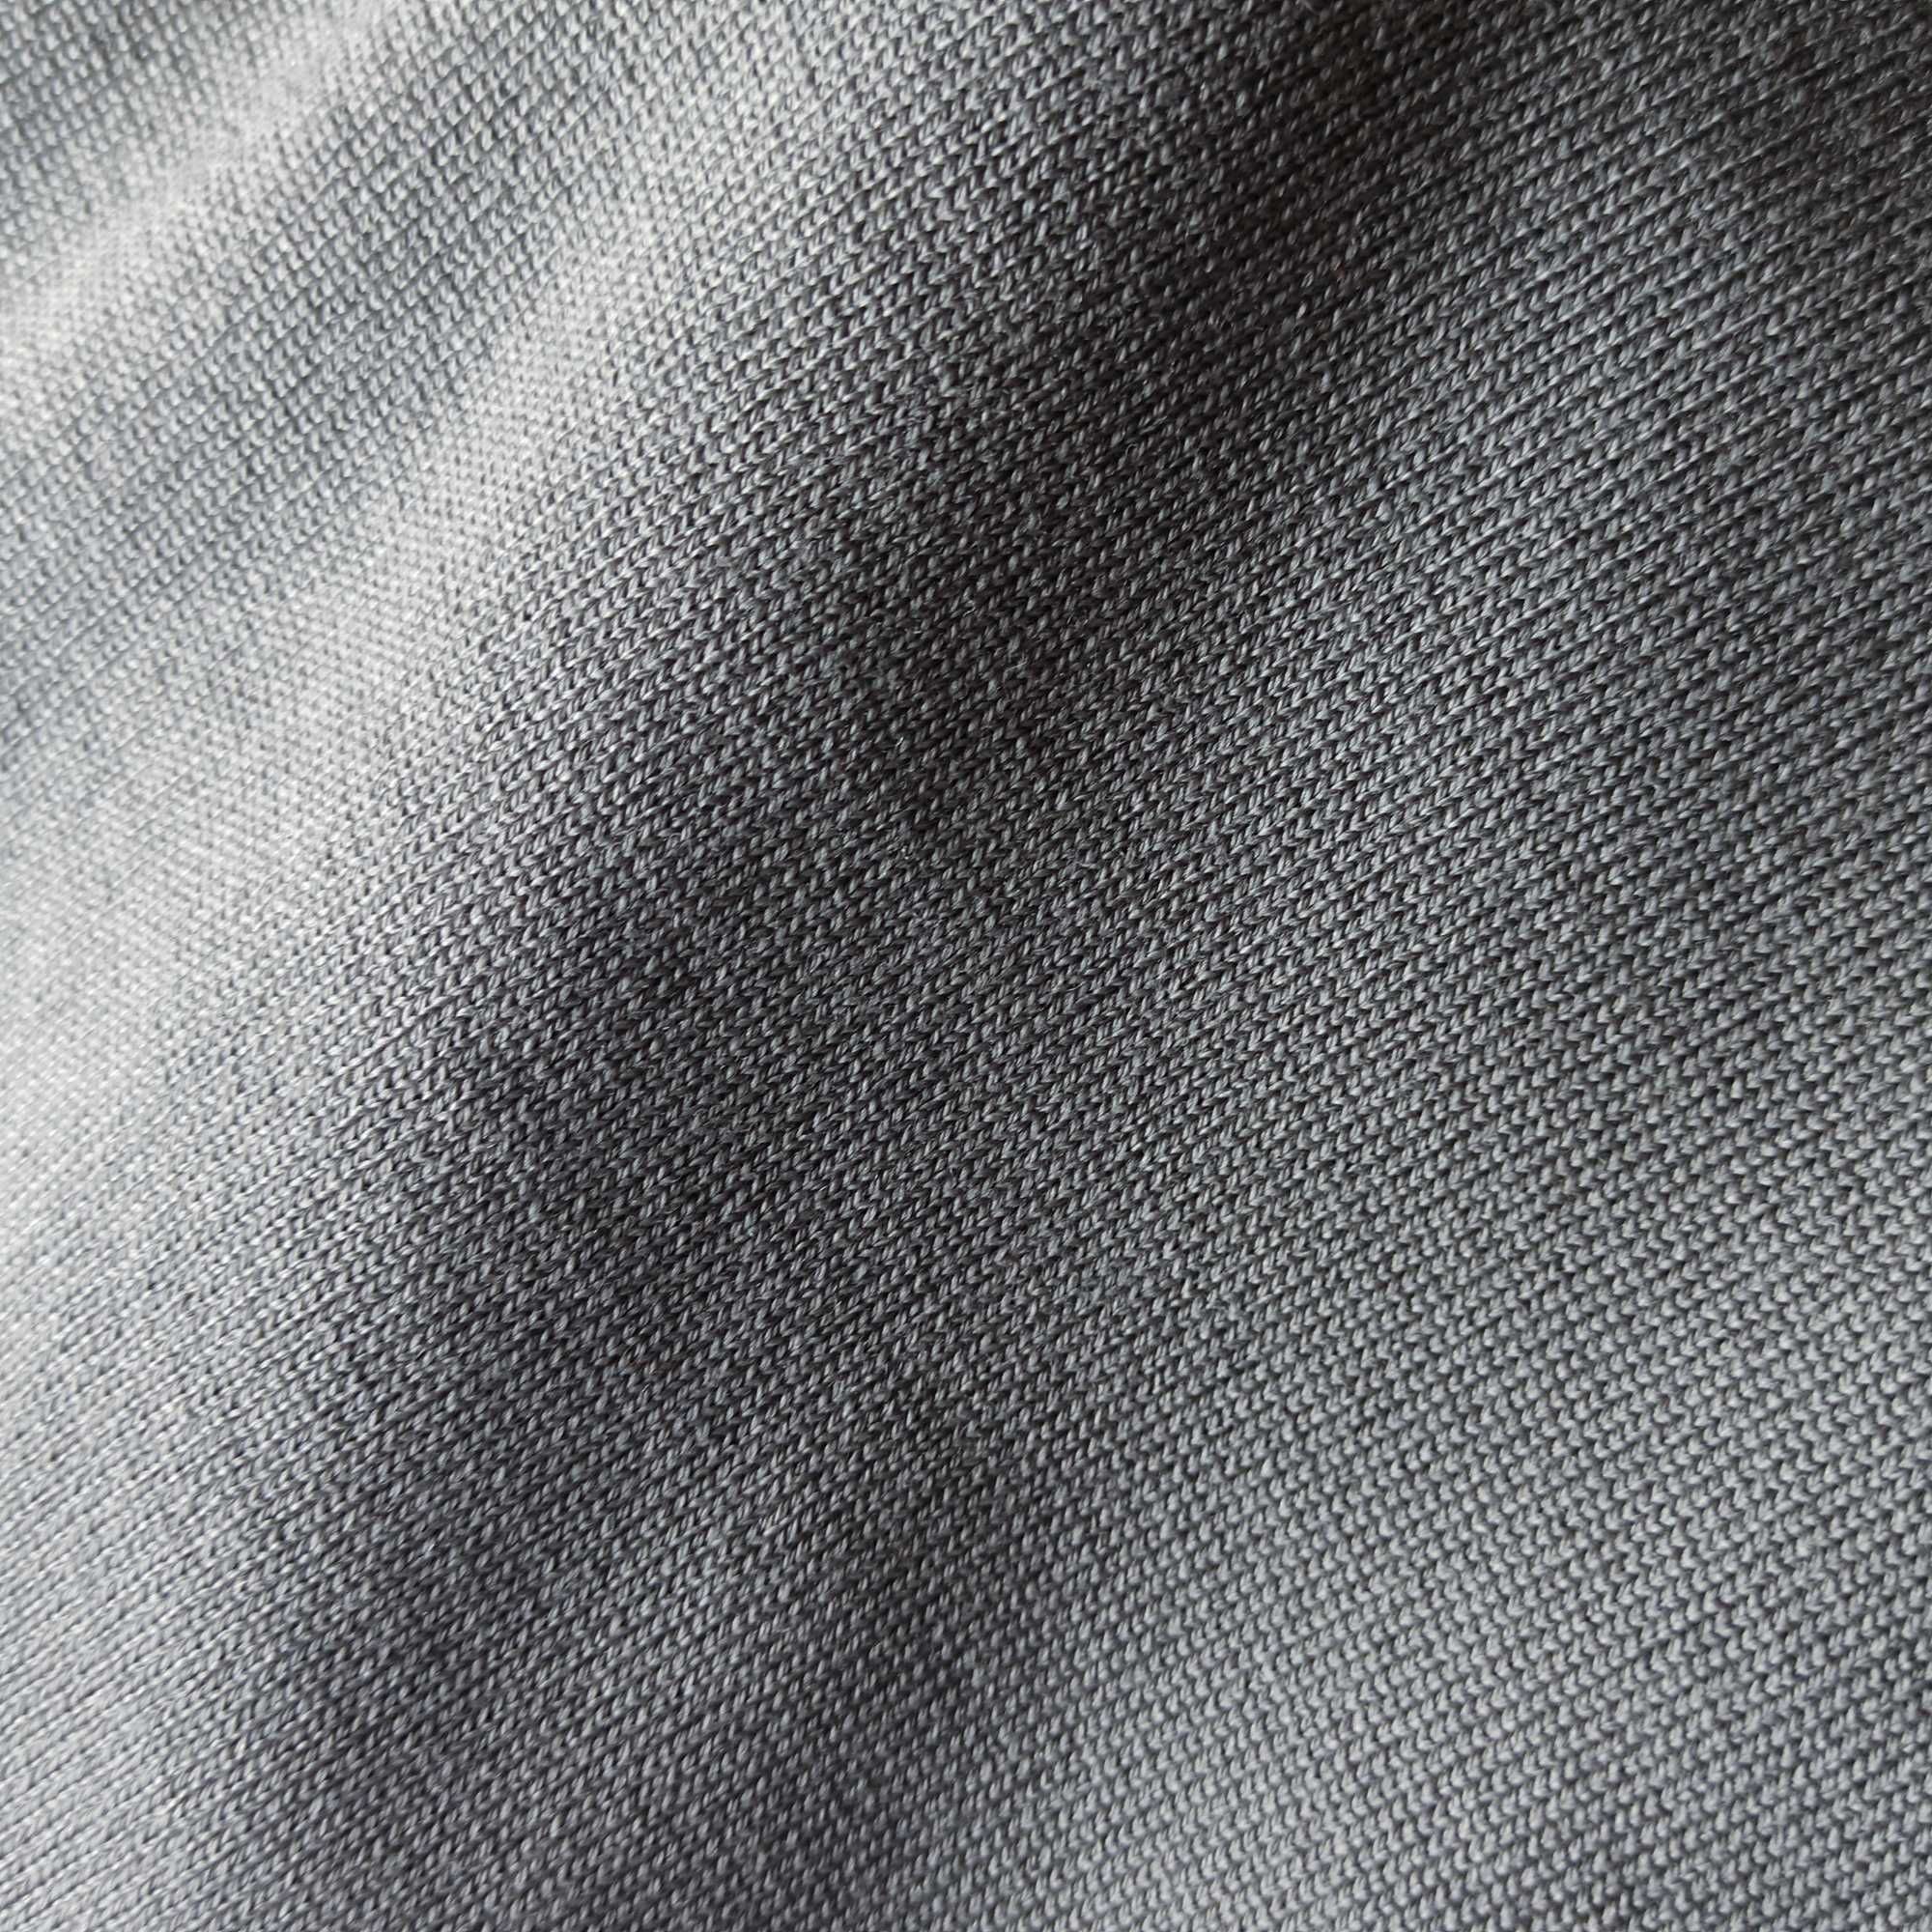 Серый свитер водолазка Италия